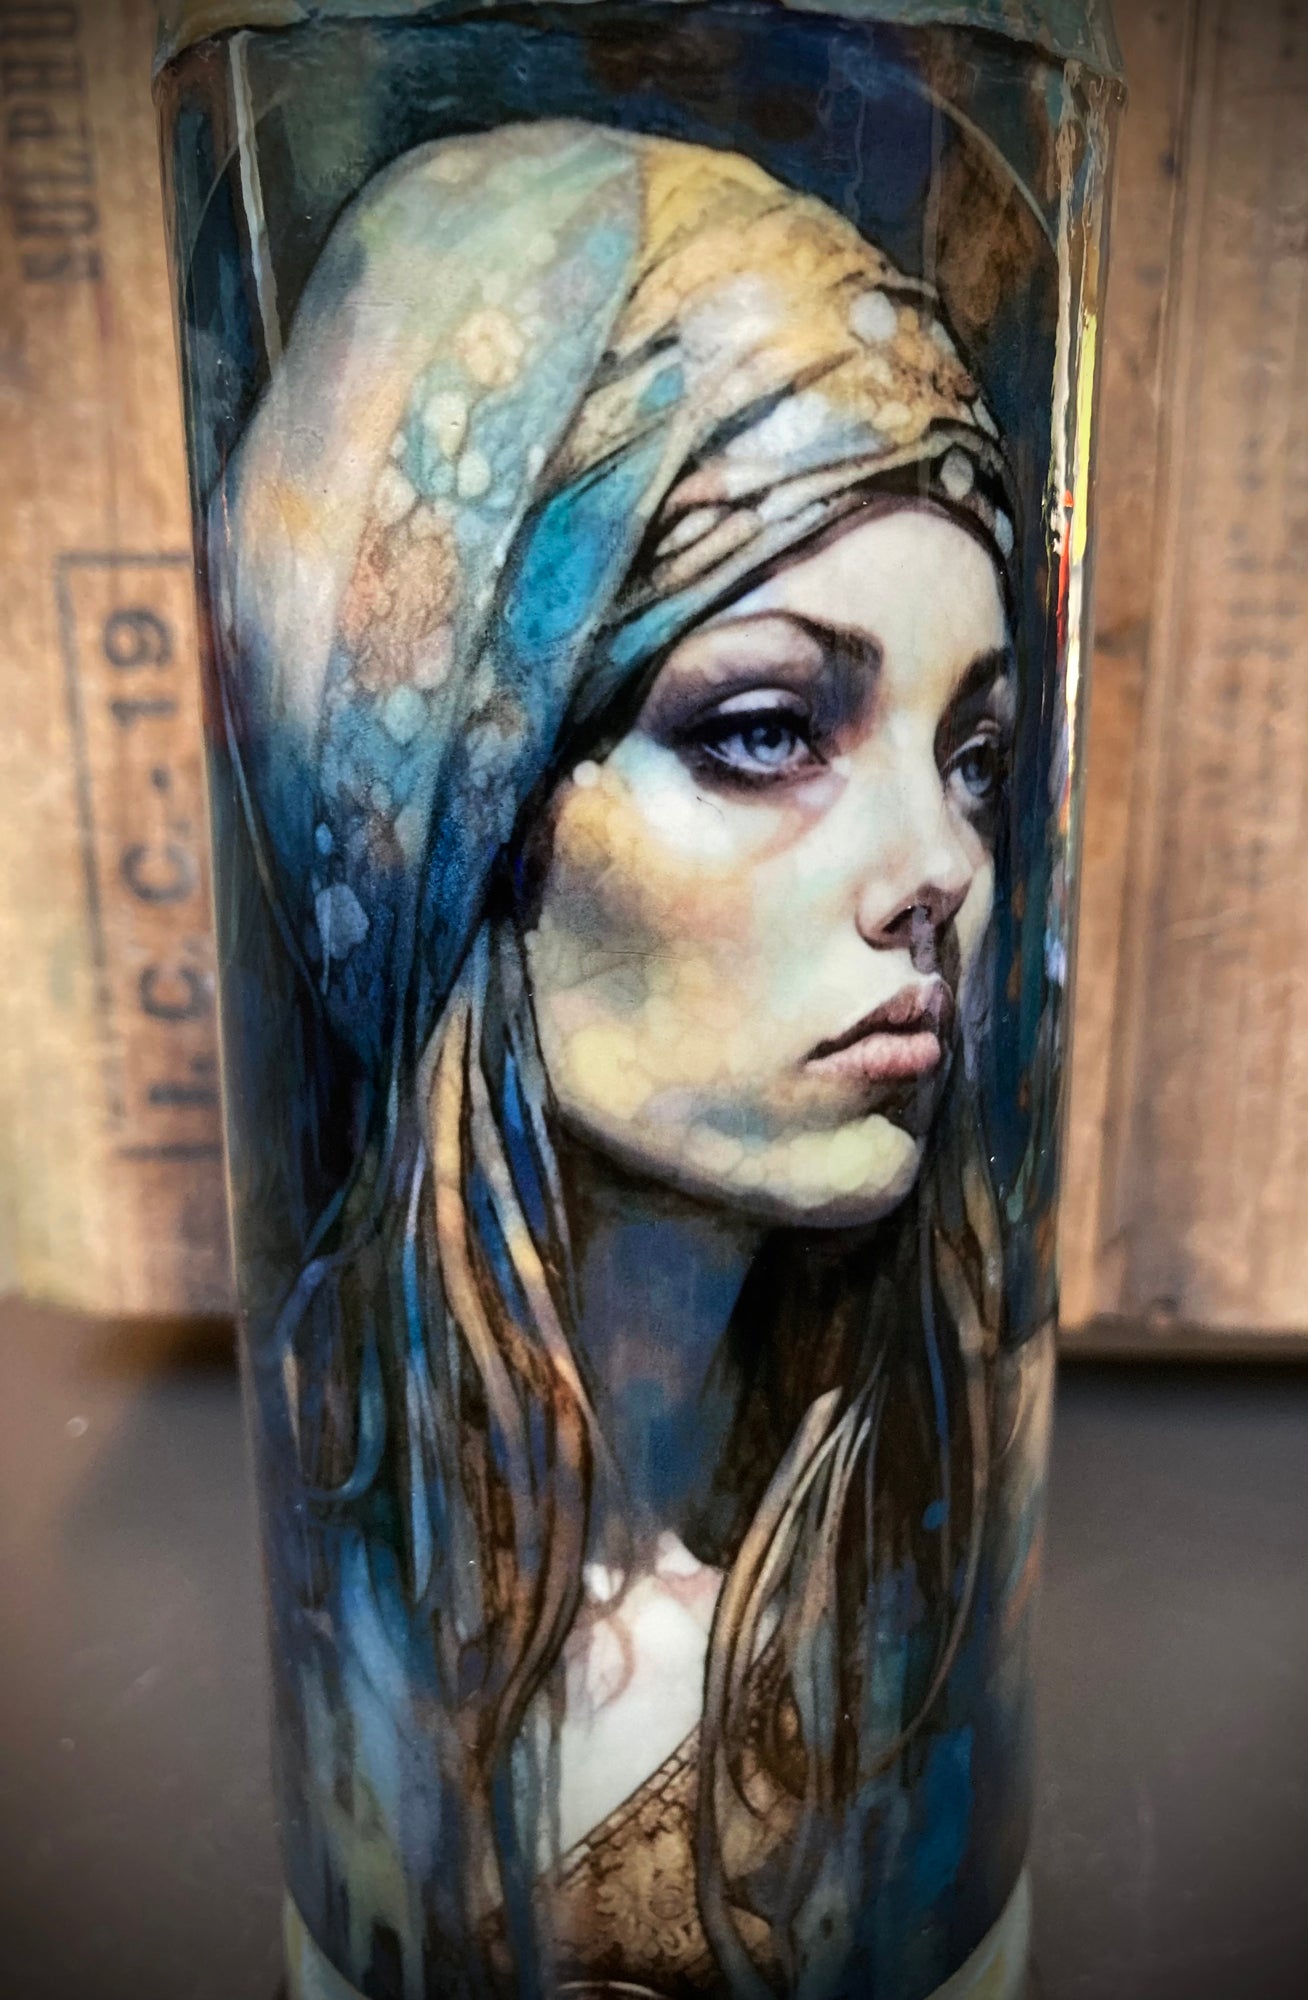 Ceramic Bong - "River Queen"